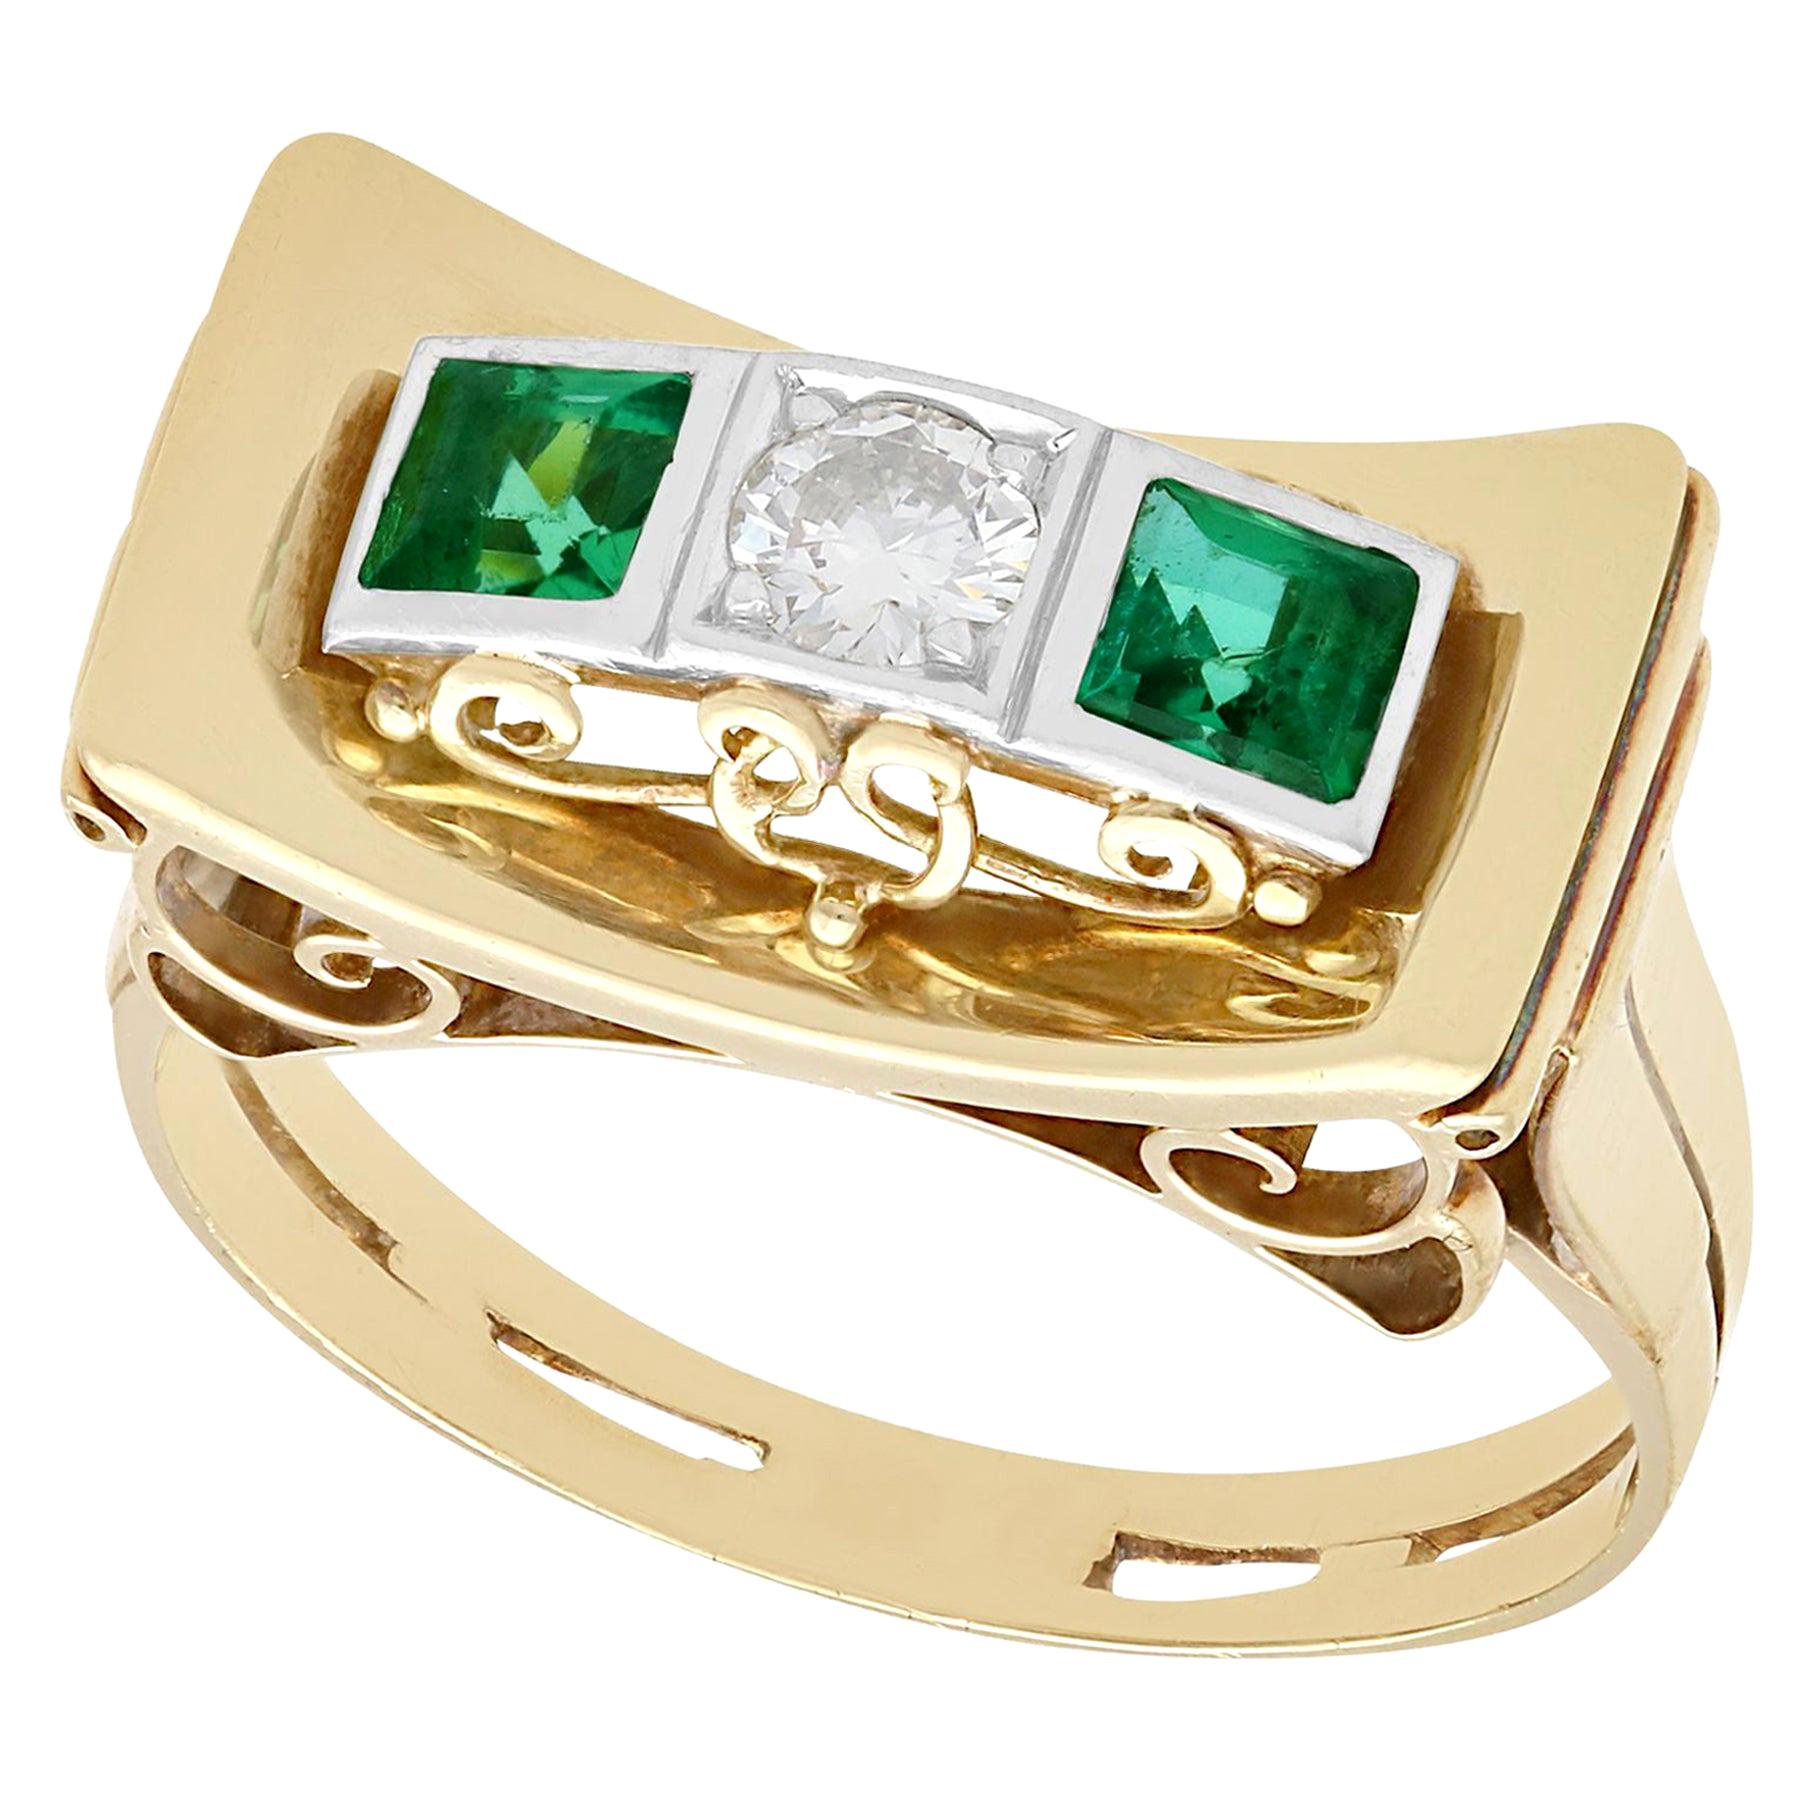 1950s Art Deco Style Tourmaline Diamond Gold Cocktail Ring